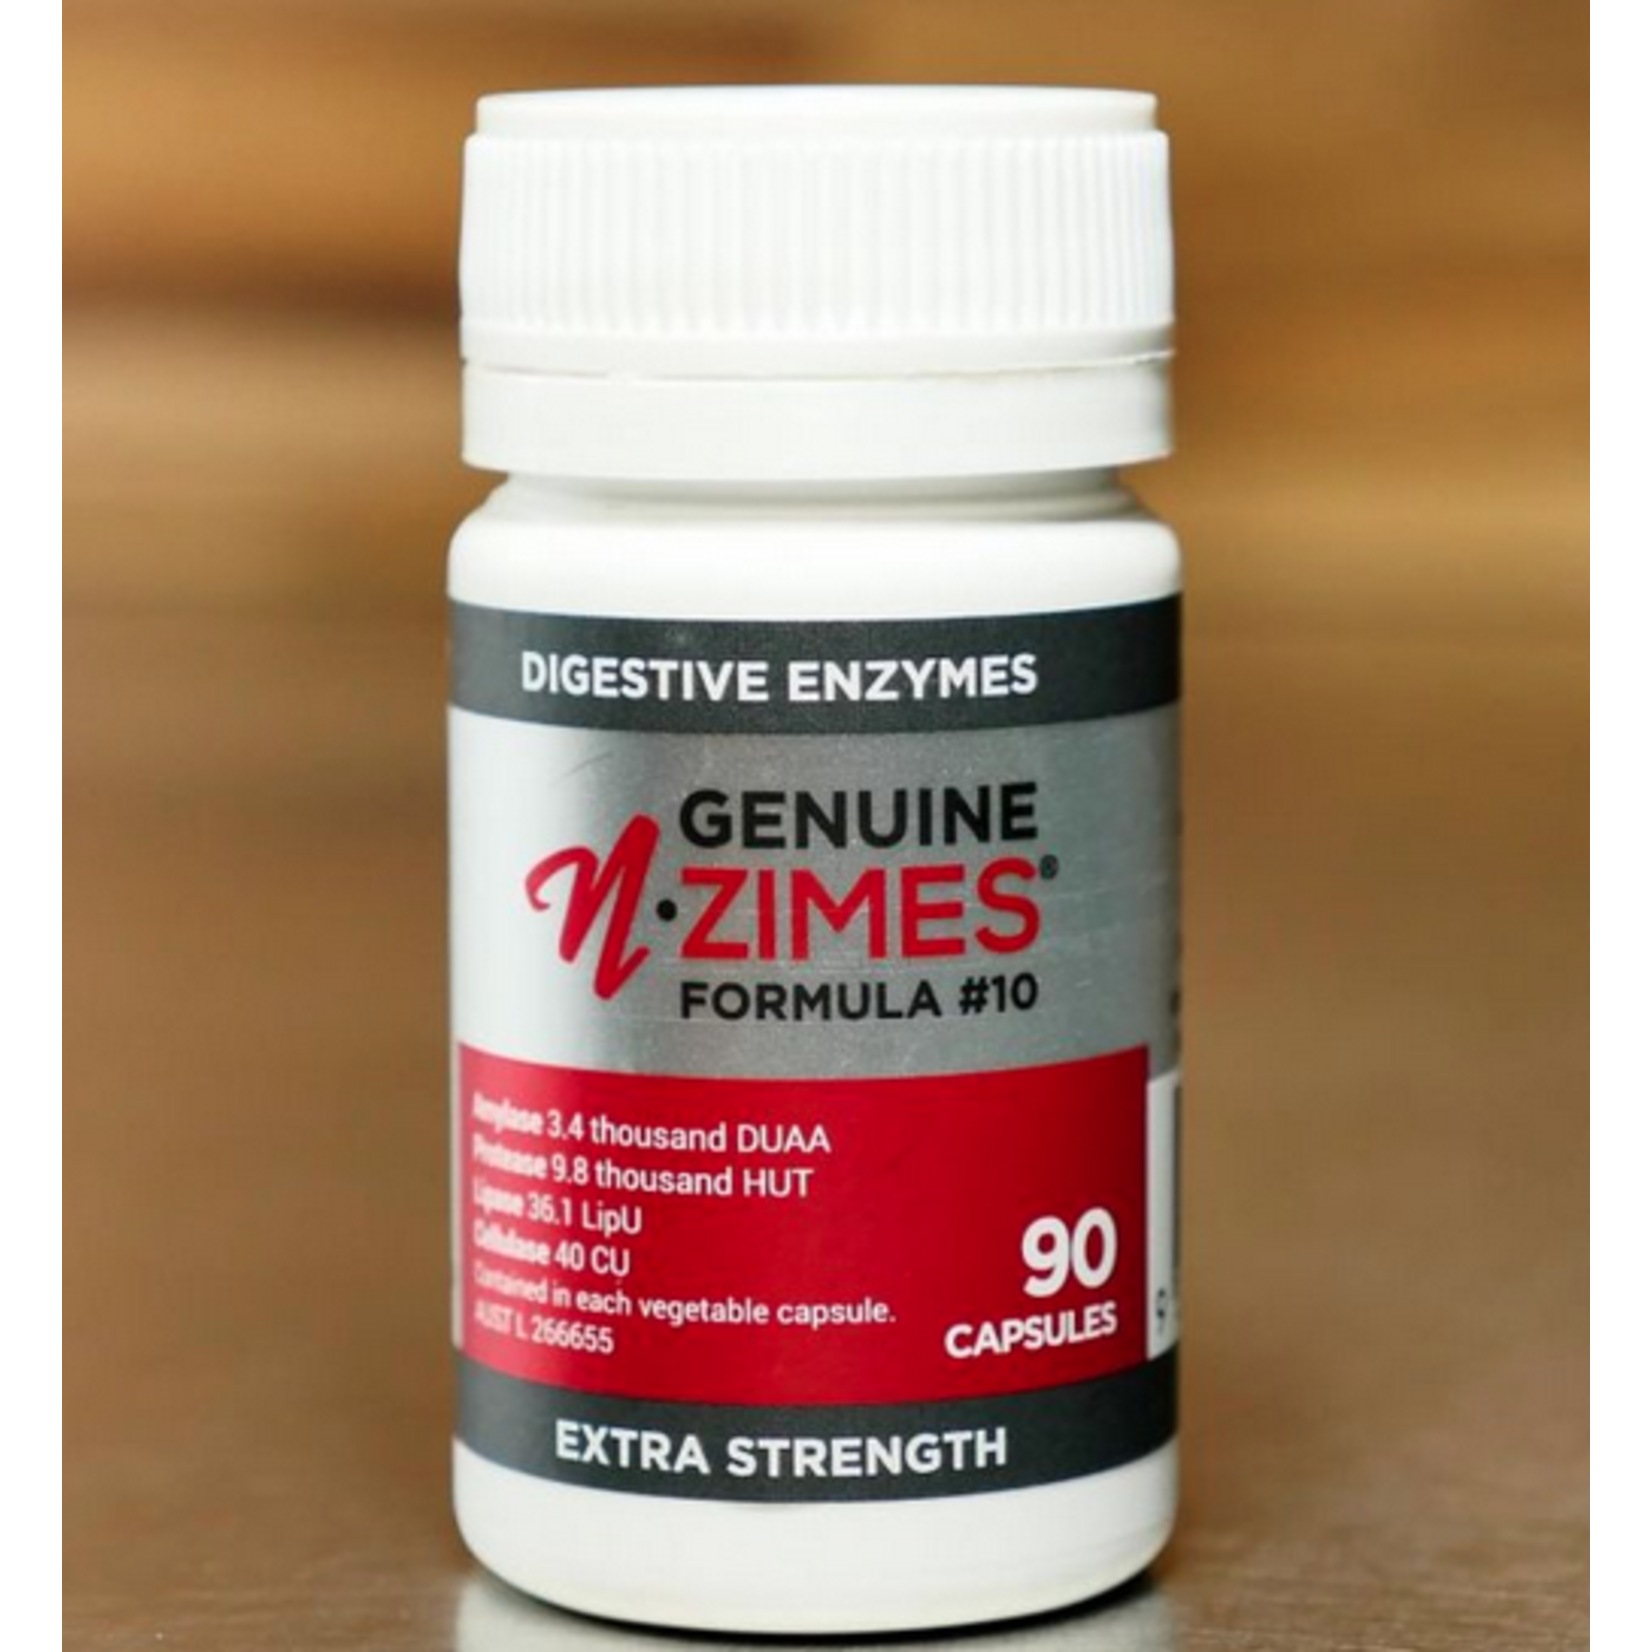 Lifestyle Enzymes Genuine N Zimes Formula #10 Digestive Enzymes 90caps